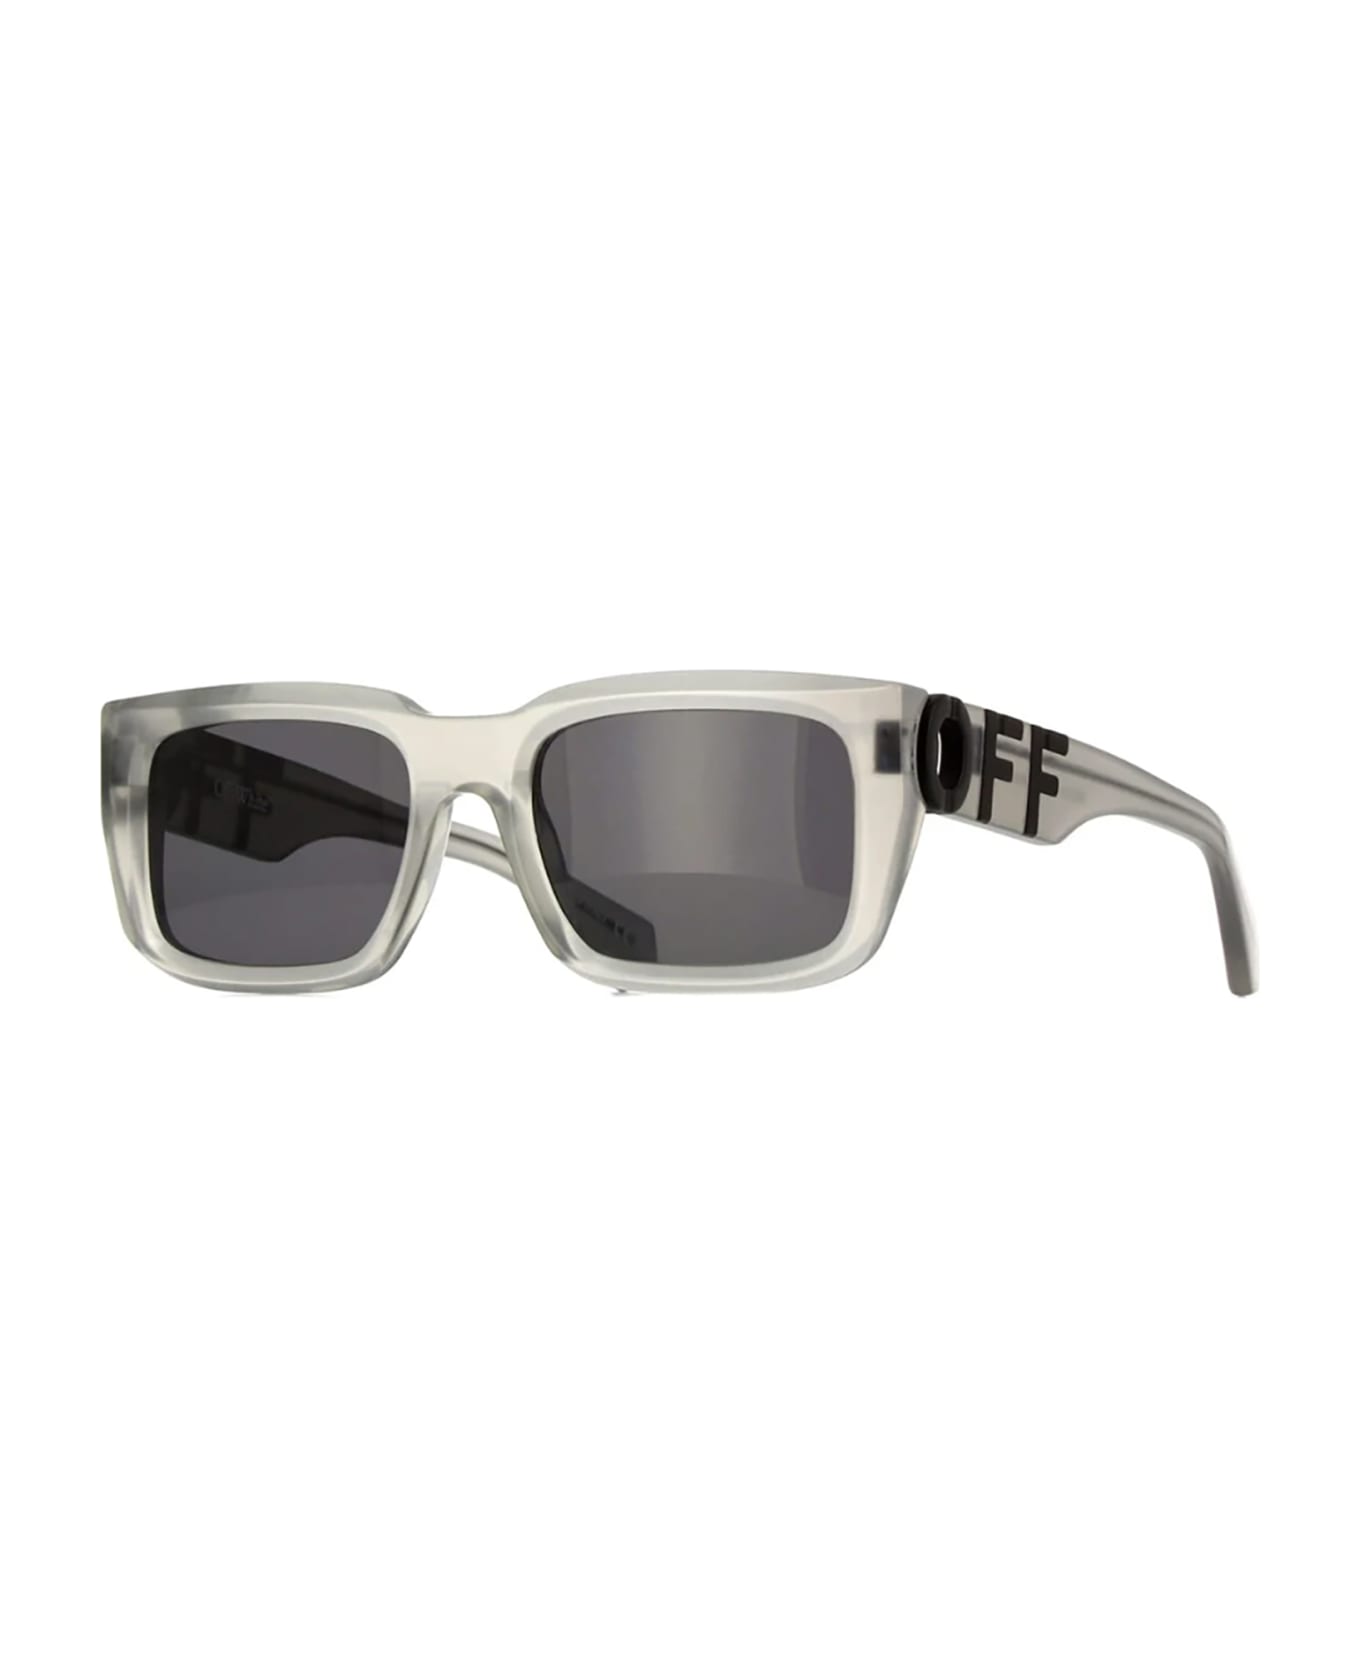 Off-White OERI125 HAYS Sunglasses - Grey サングラス